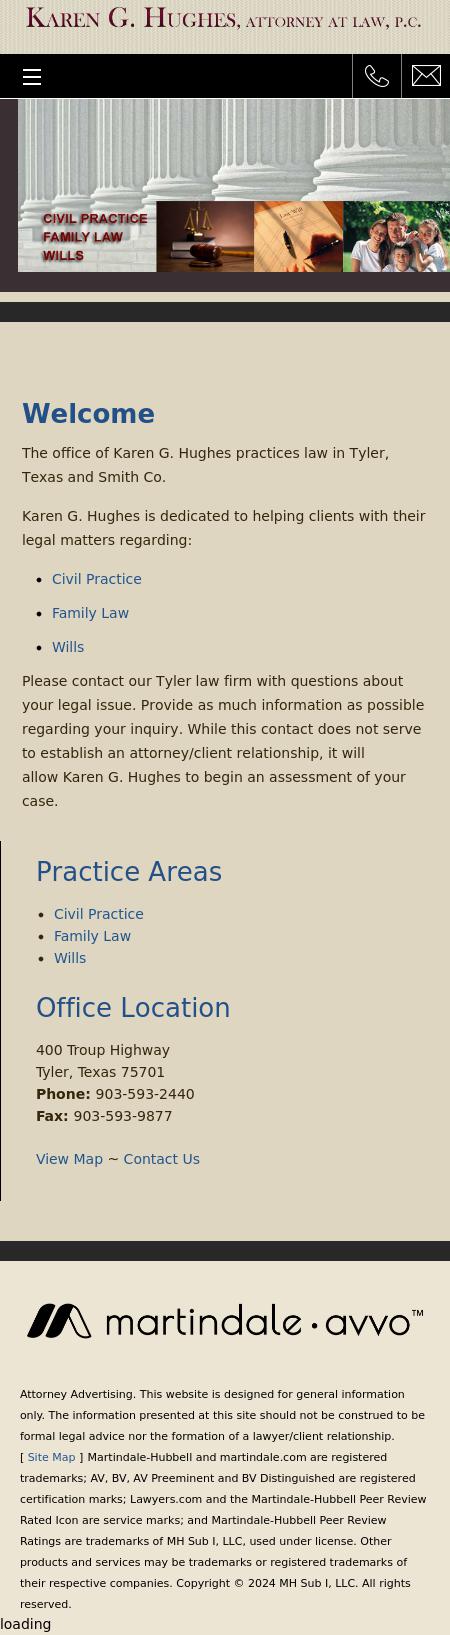 Healy Law - Tyler TX Lawyers